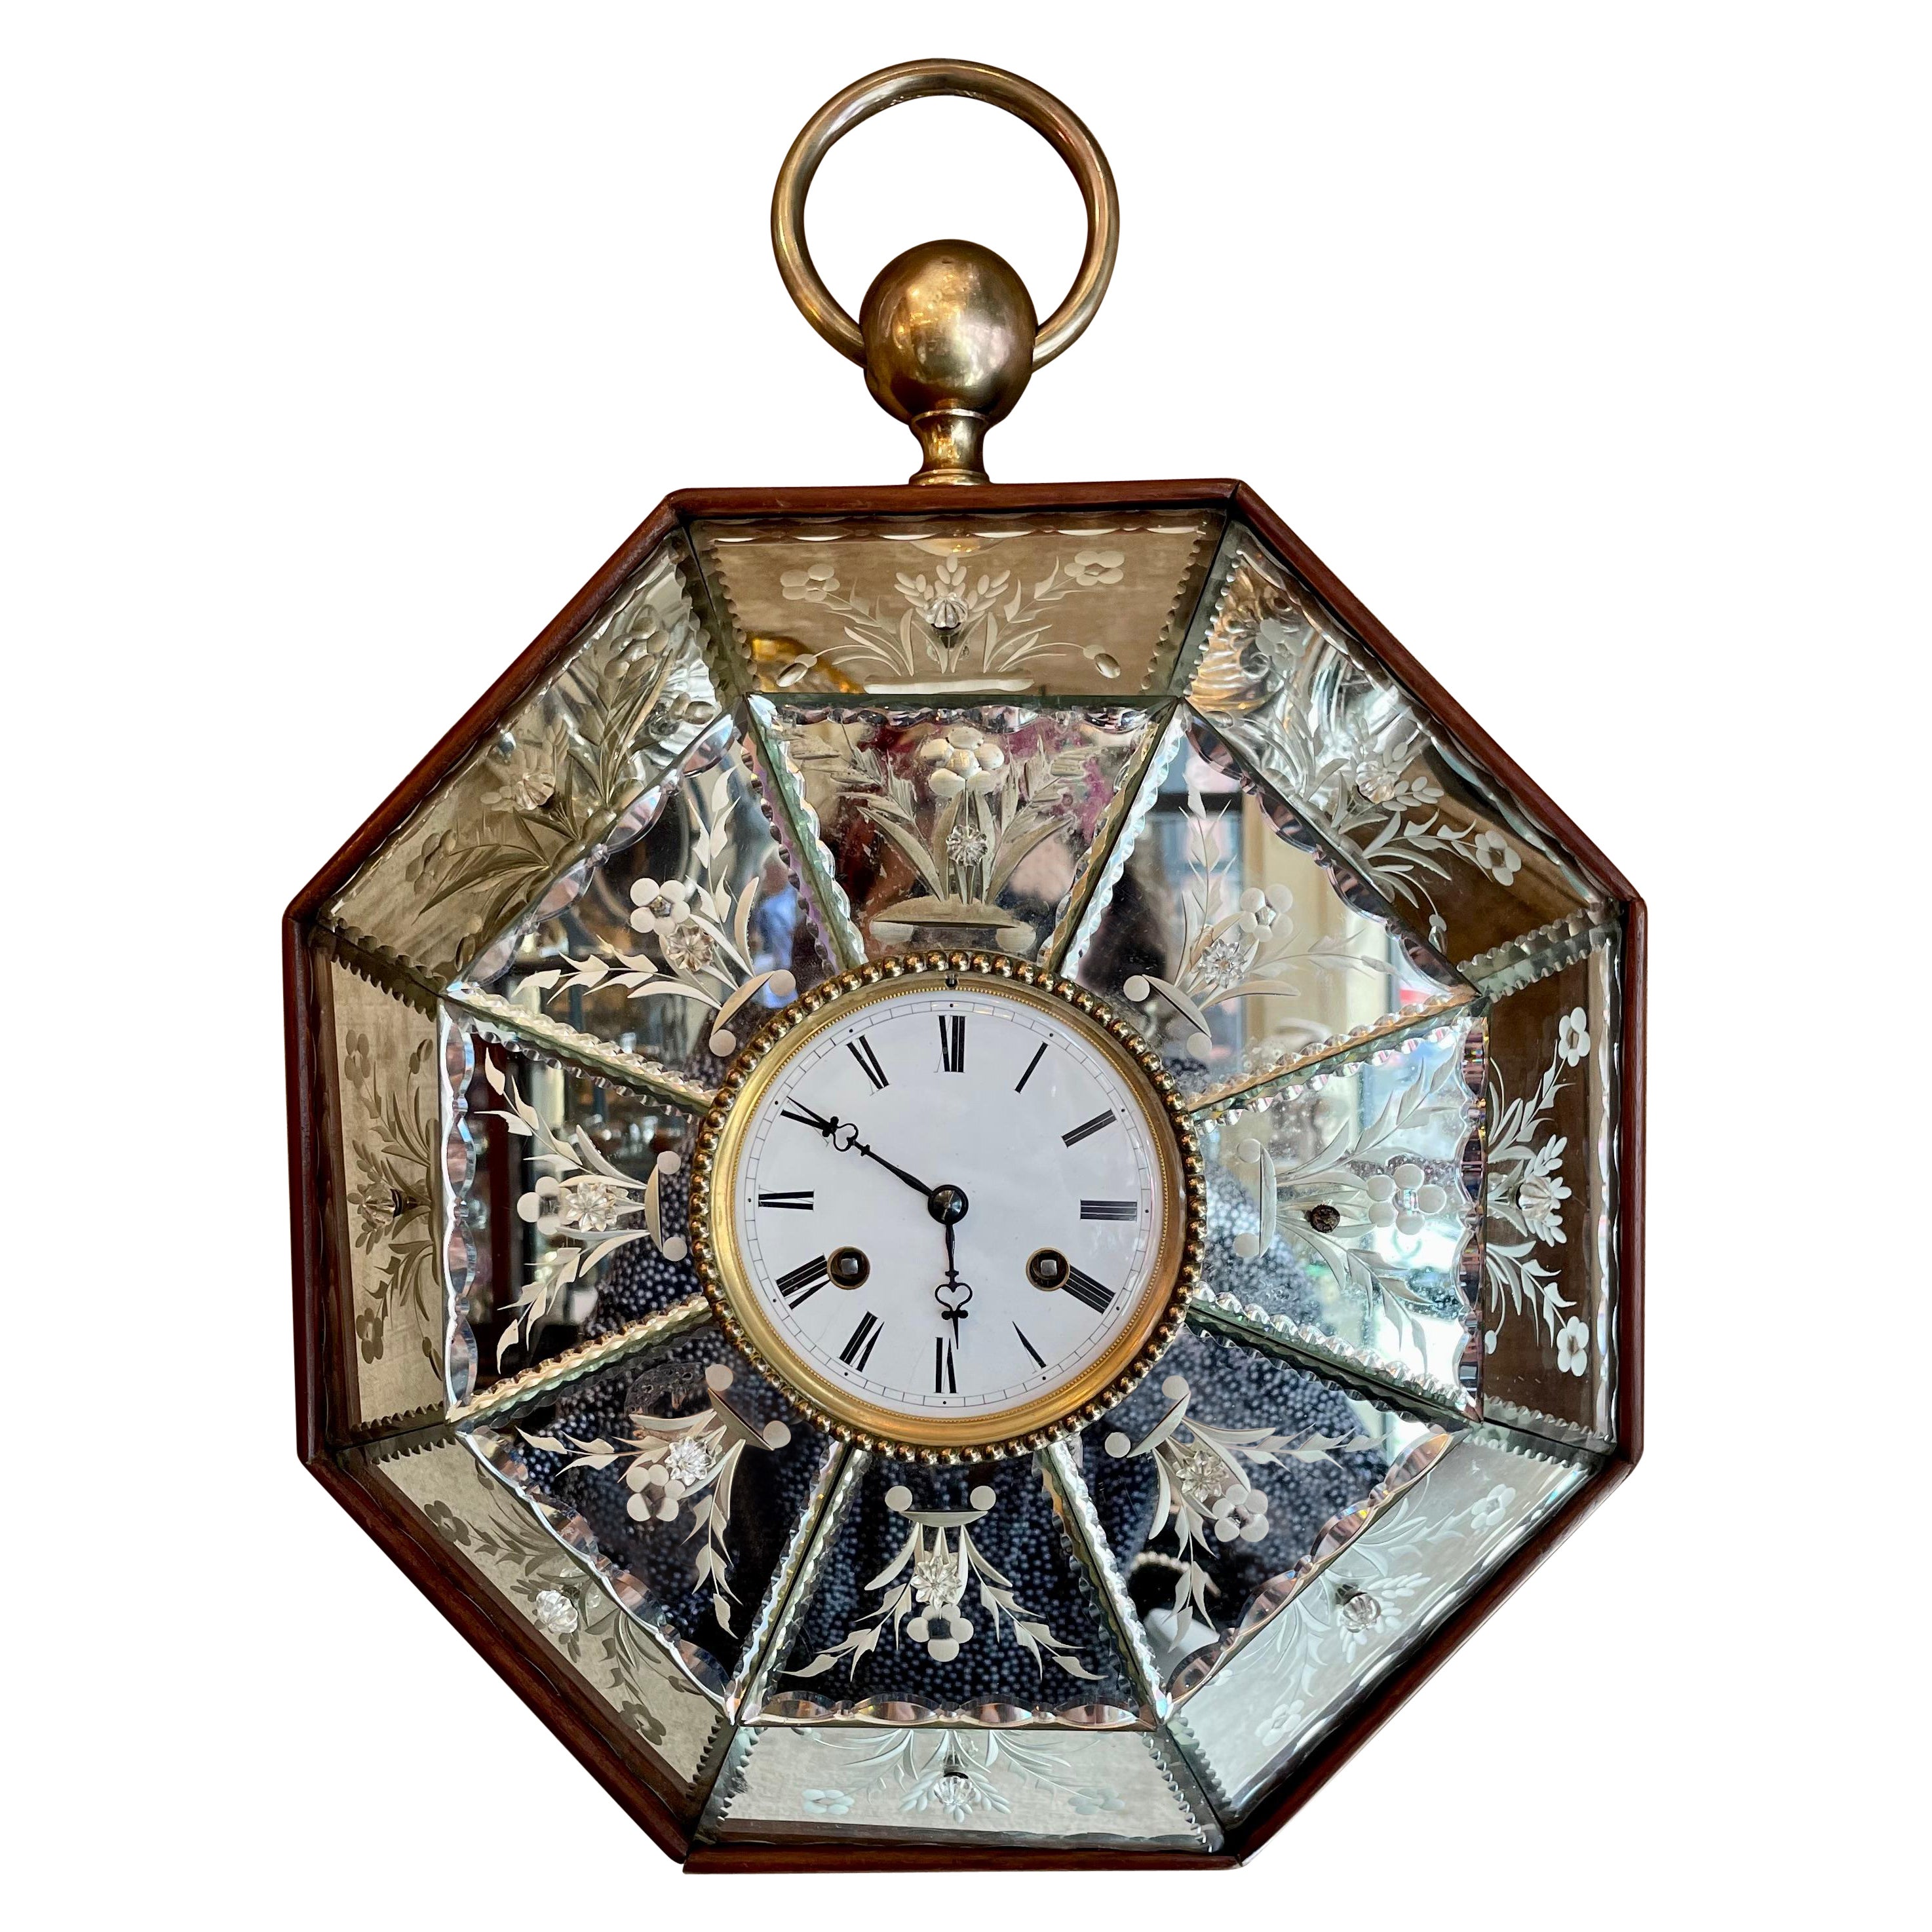 Antique Mirrored & Diamond-Etched Wall Clock, circa 1900-1910